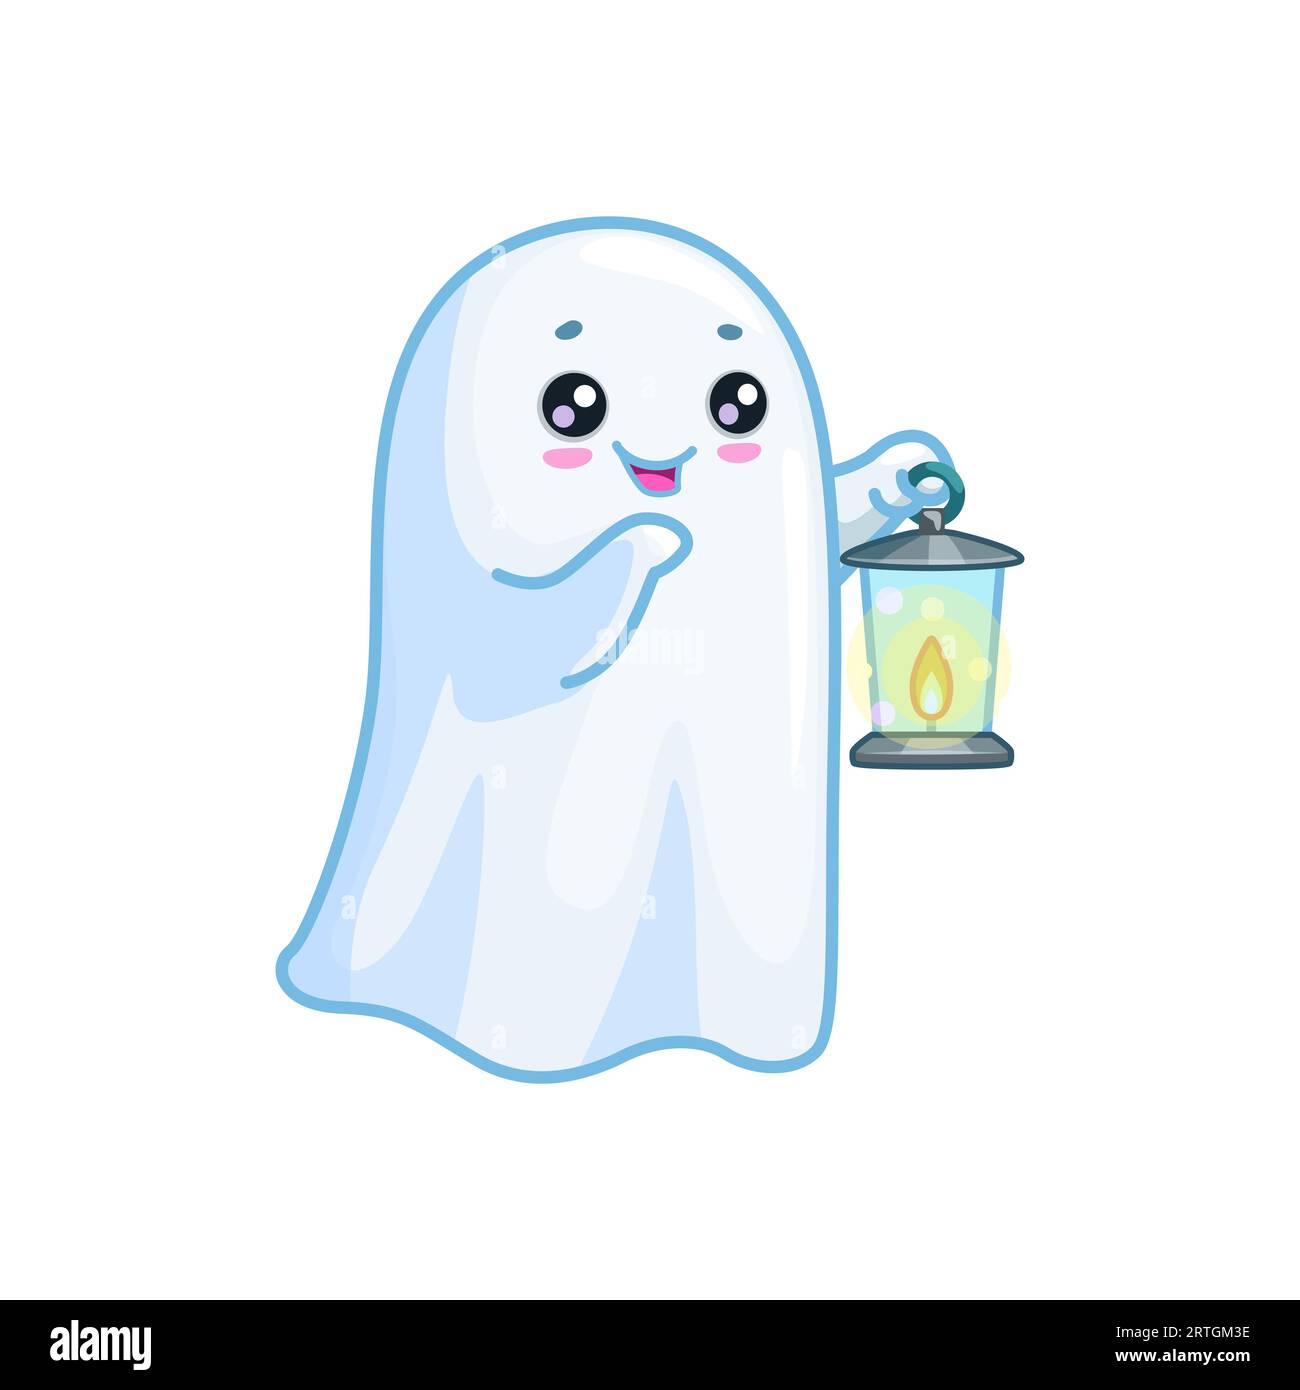 Halloween kawaii ghost character clutching a lit lantern. Isolated